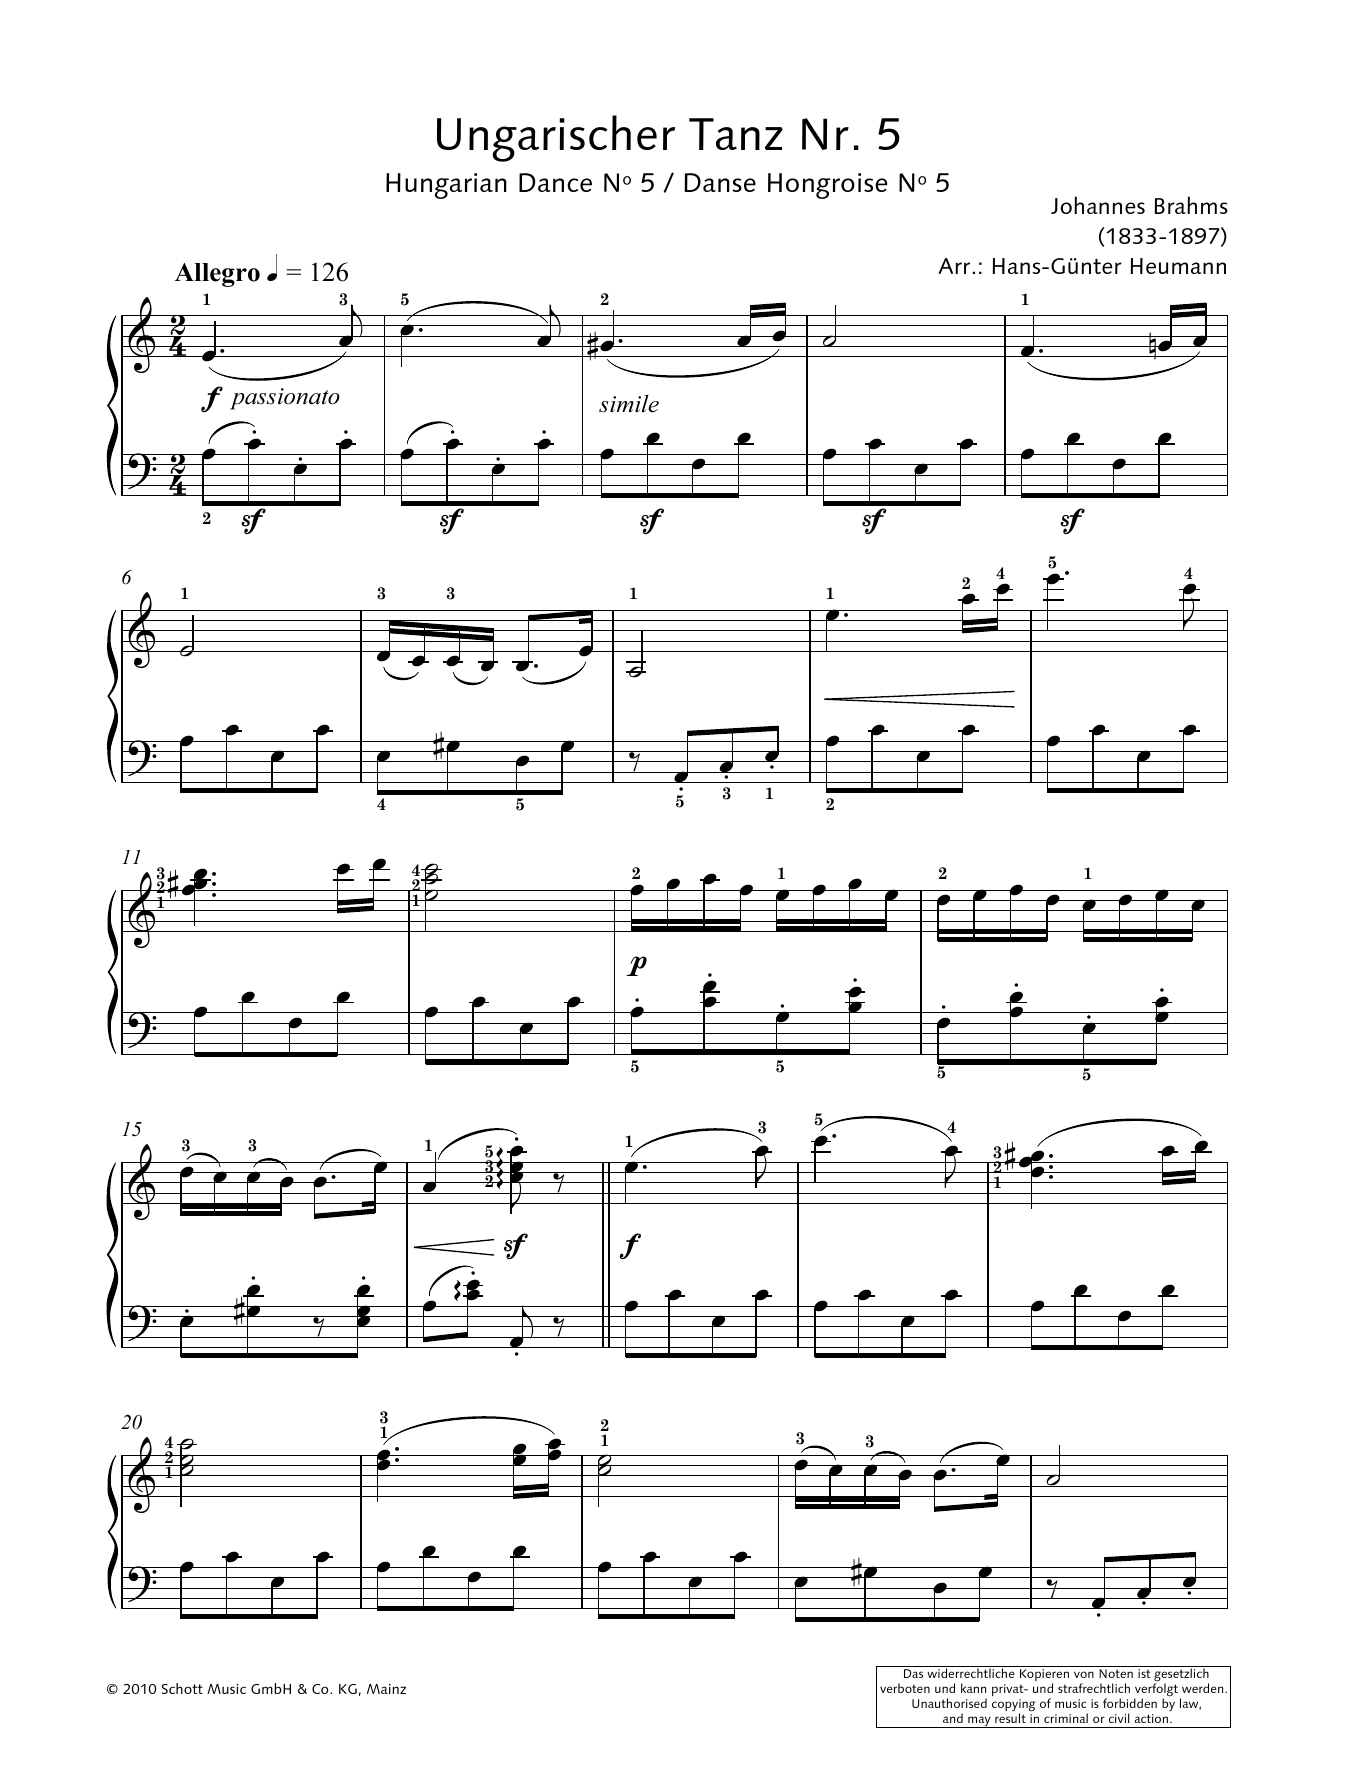 Hans-Gunter Heumann Hungarian Dance No. 5 Sheet Music Notes & Chords for Piano Solo - Download or Print PDF